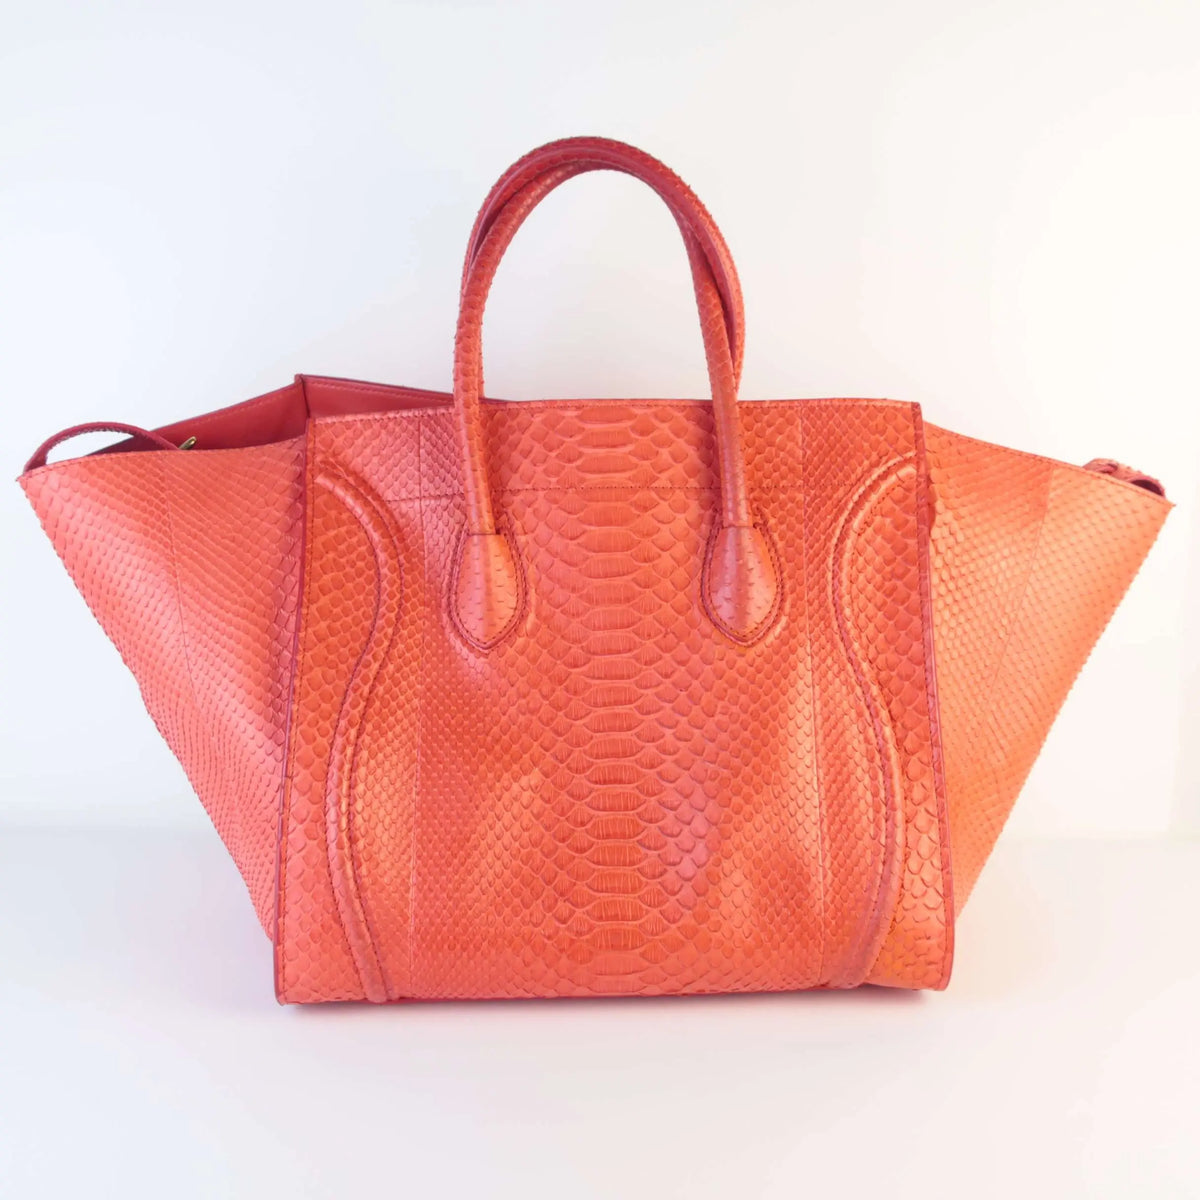 Celine Orange Python Medium Phantom Luggage Tote Bag